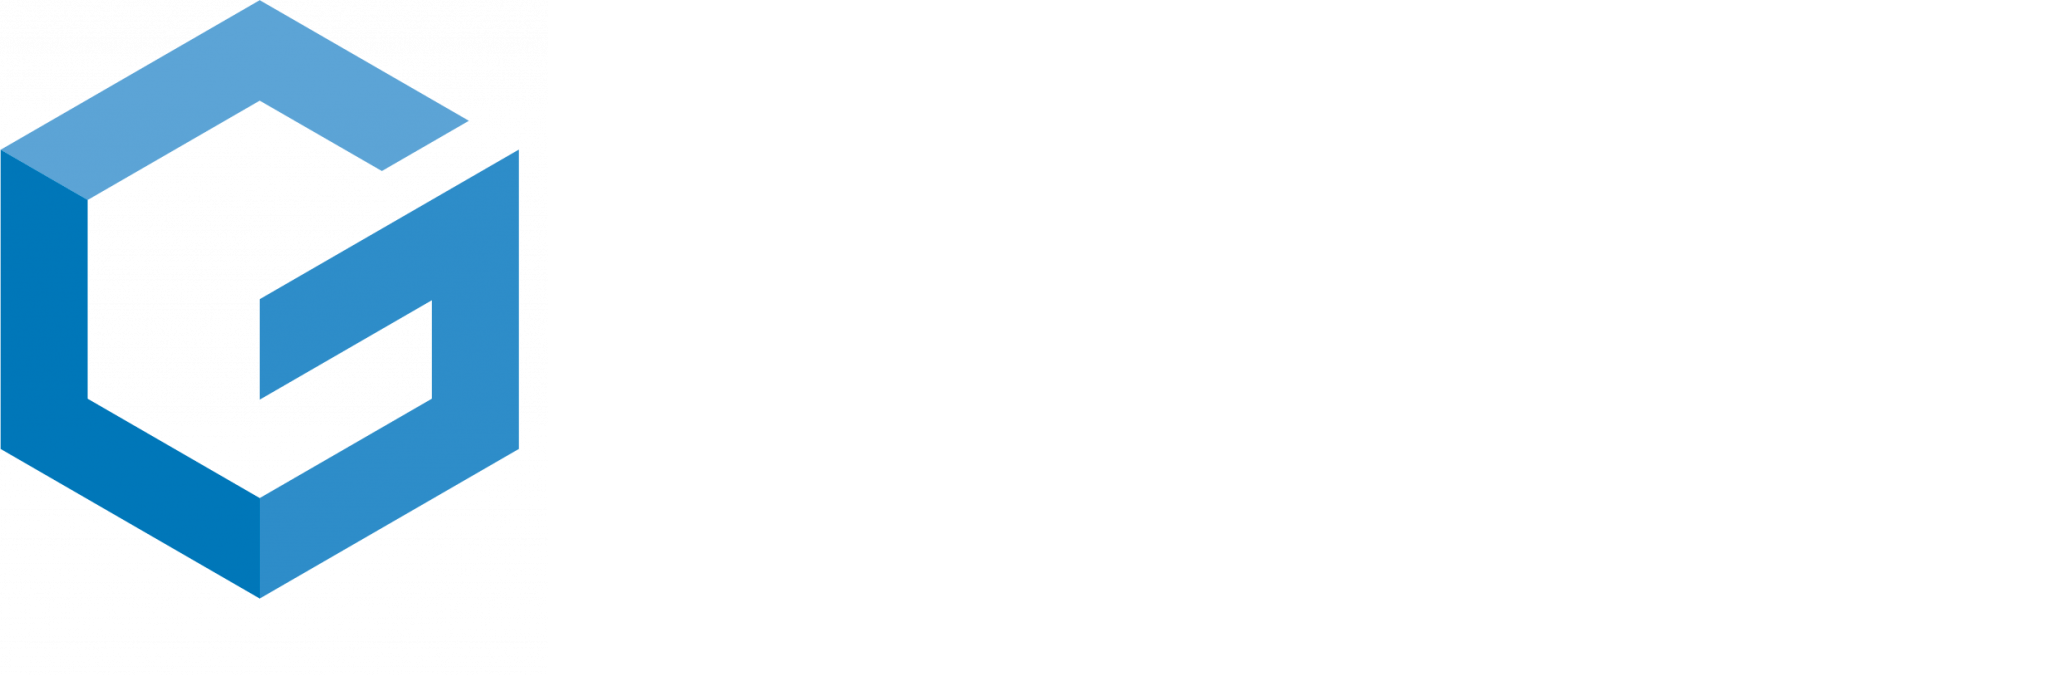 GeBioM Group – Digitizing the biomechanical world